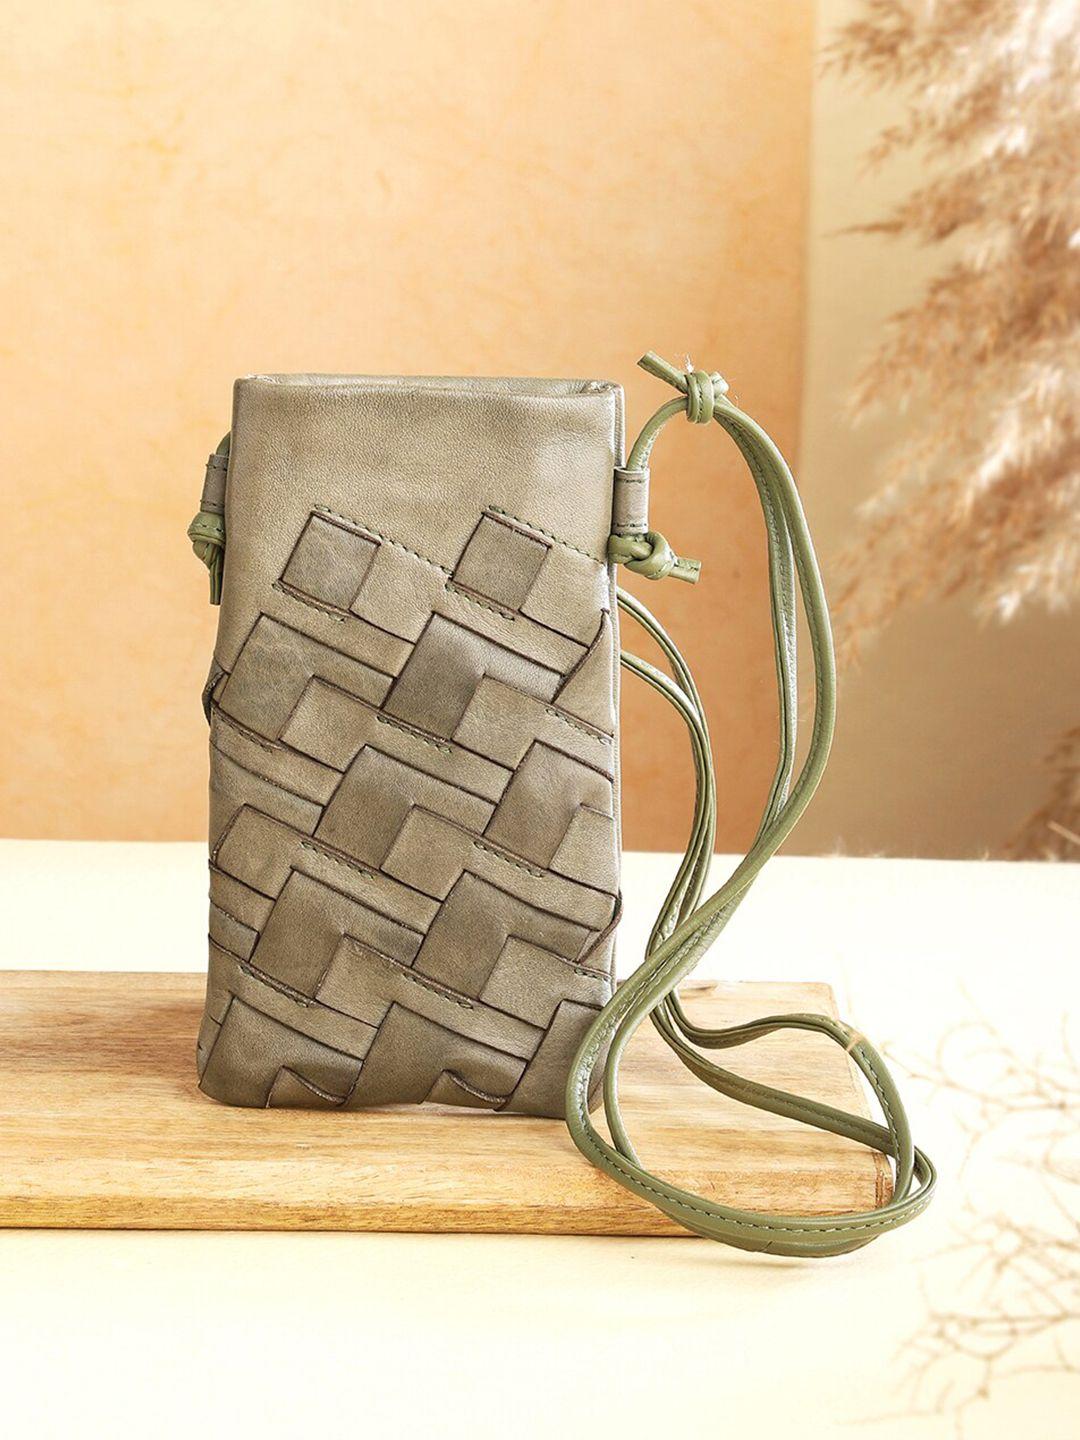 fabindia-miniature-textured-leather-mobile-sling-bag